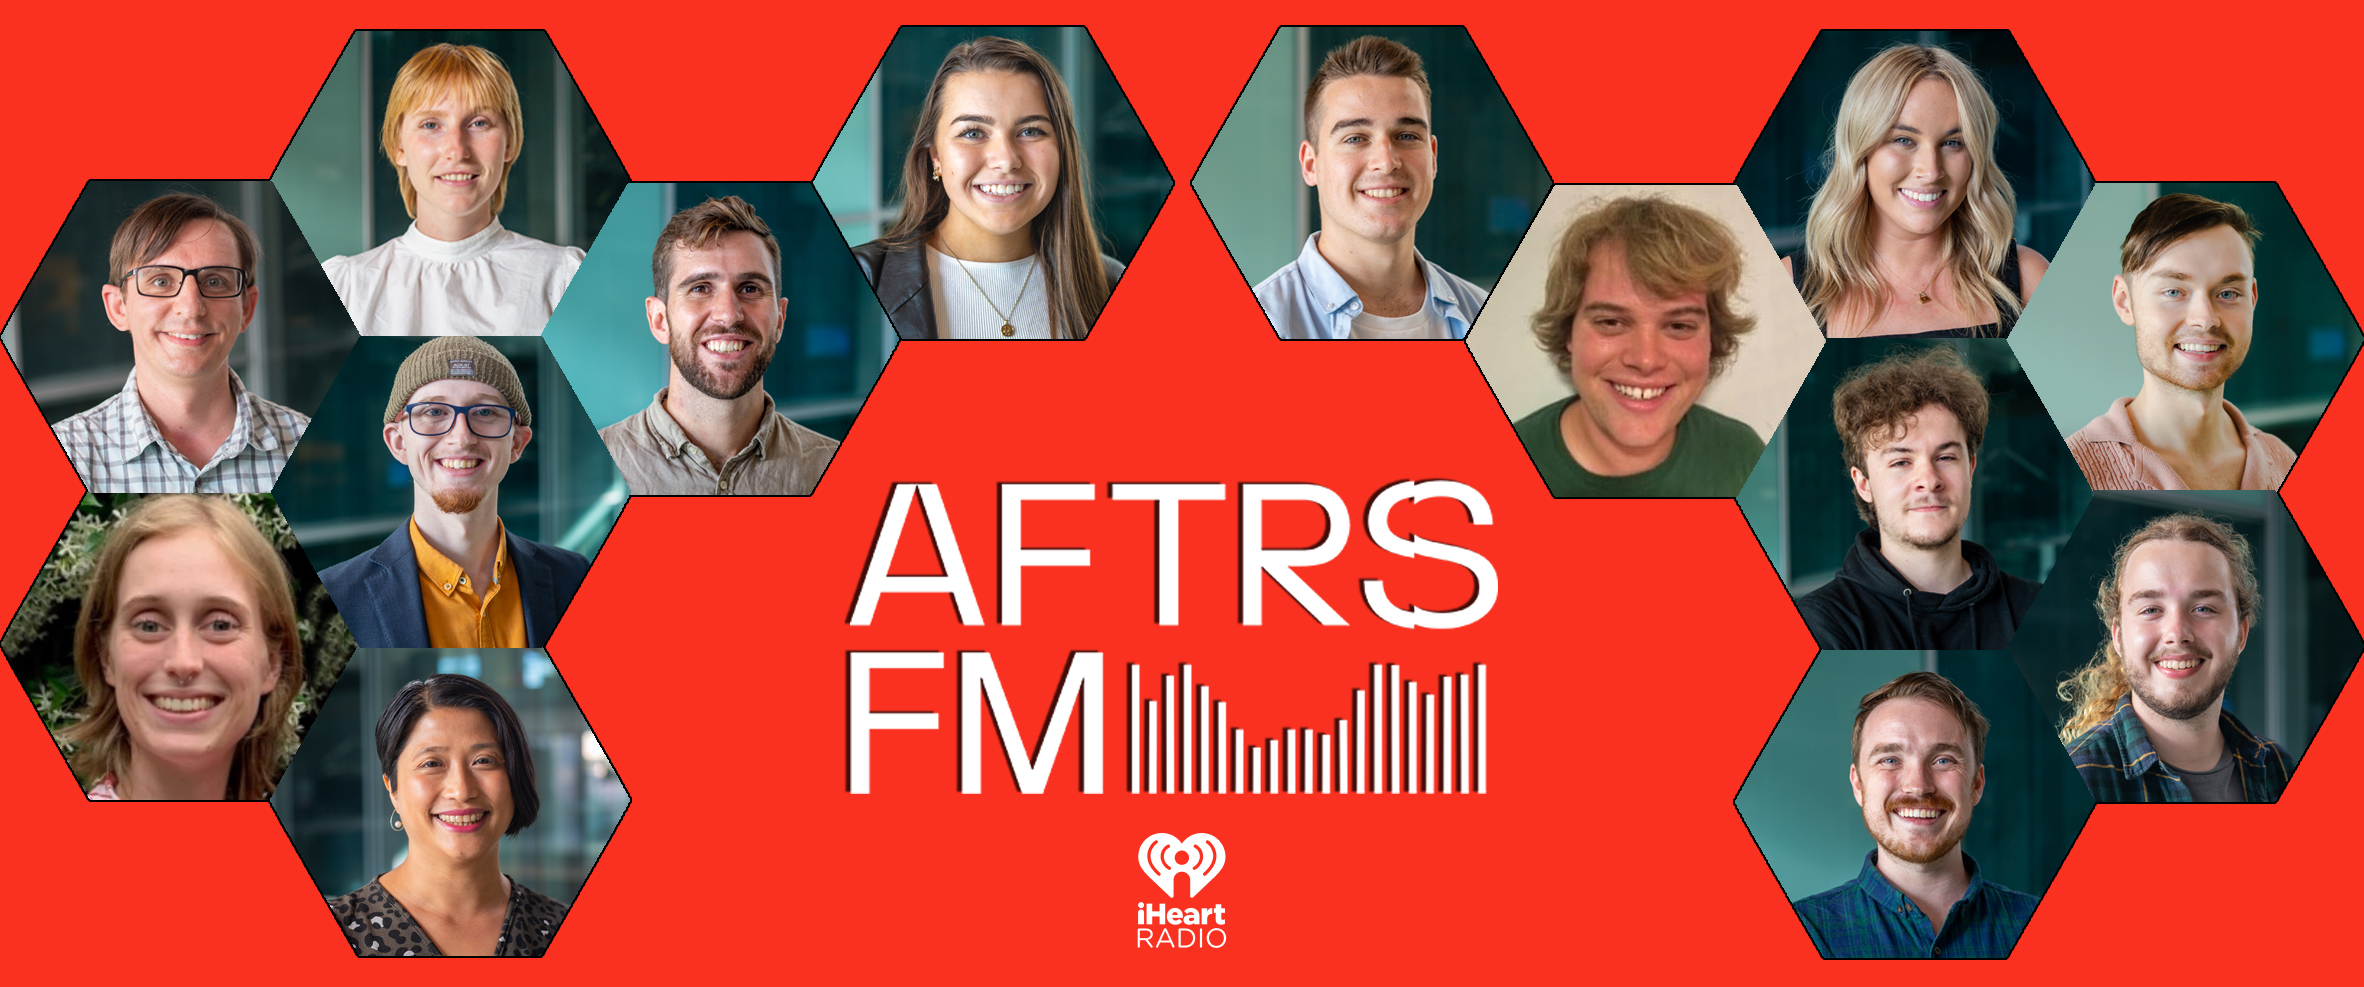 AFTRS FM